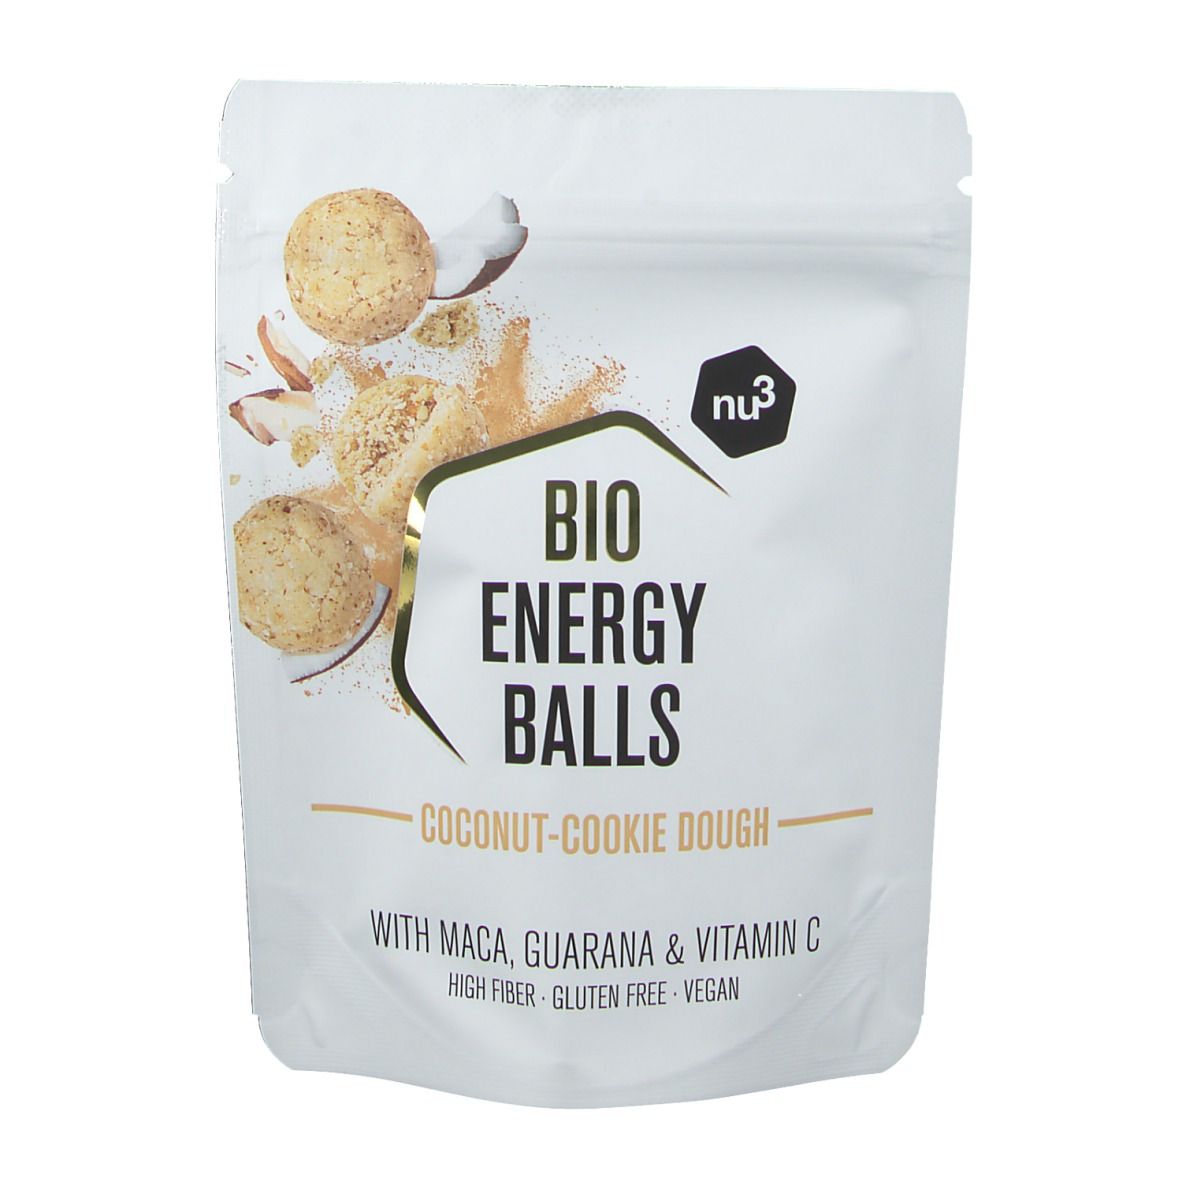 nu3 Bio Energy Balls, Coconut-Cookie Dough